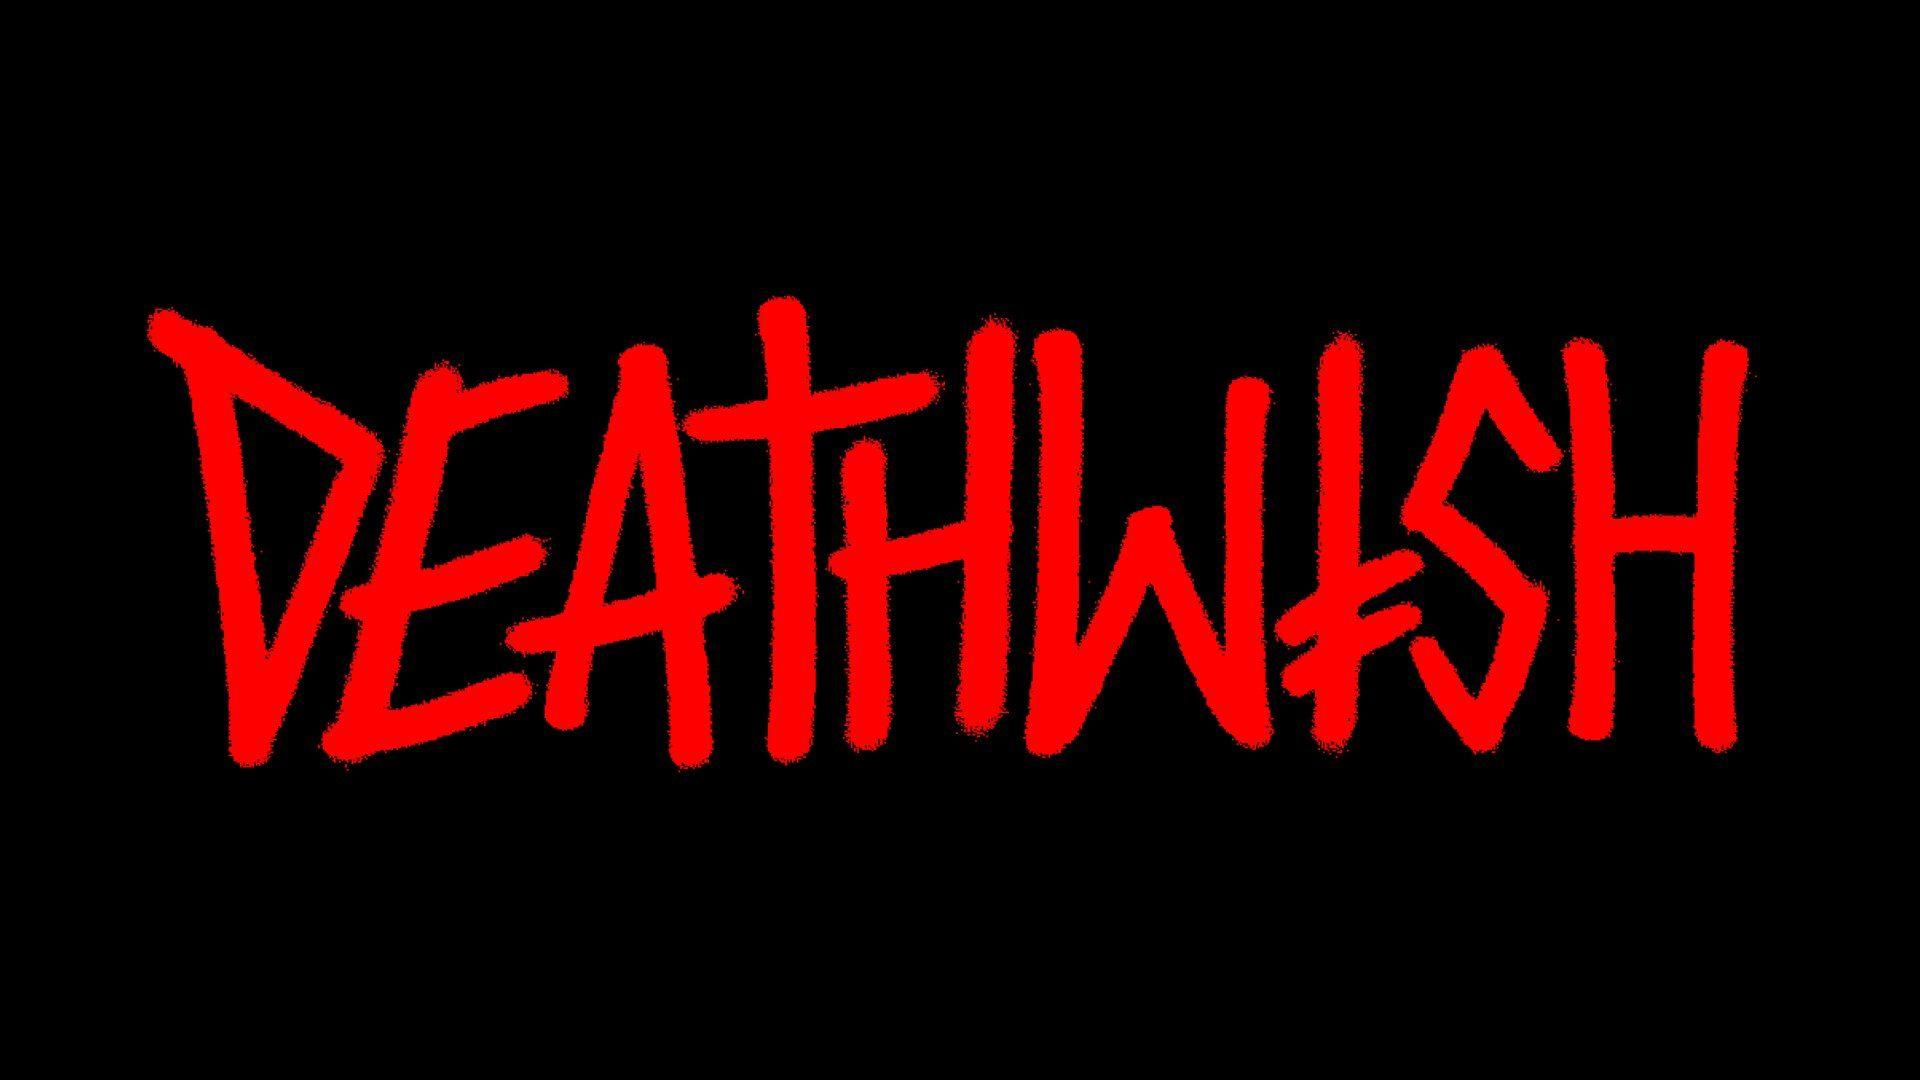 Death Wish Skate Logo - Deathwish skateboards wallpaper - SF Wallpaper